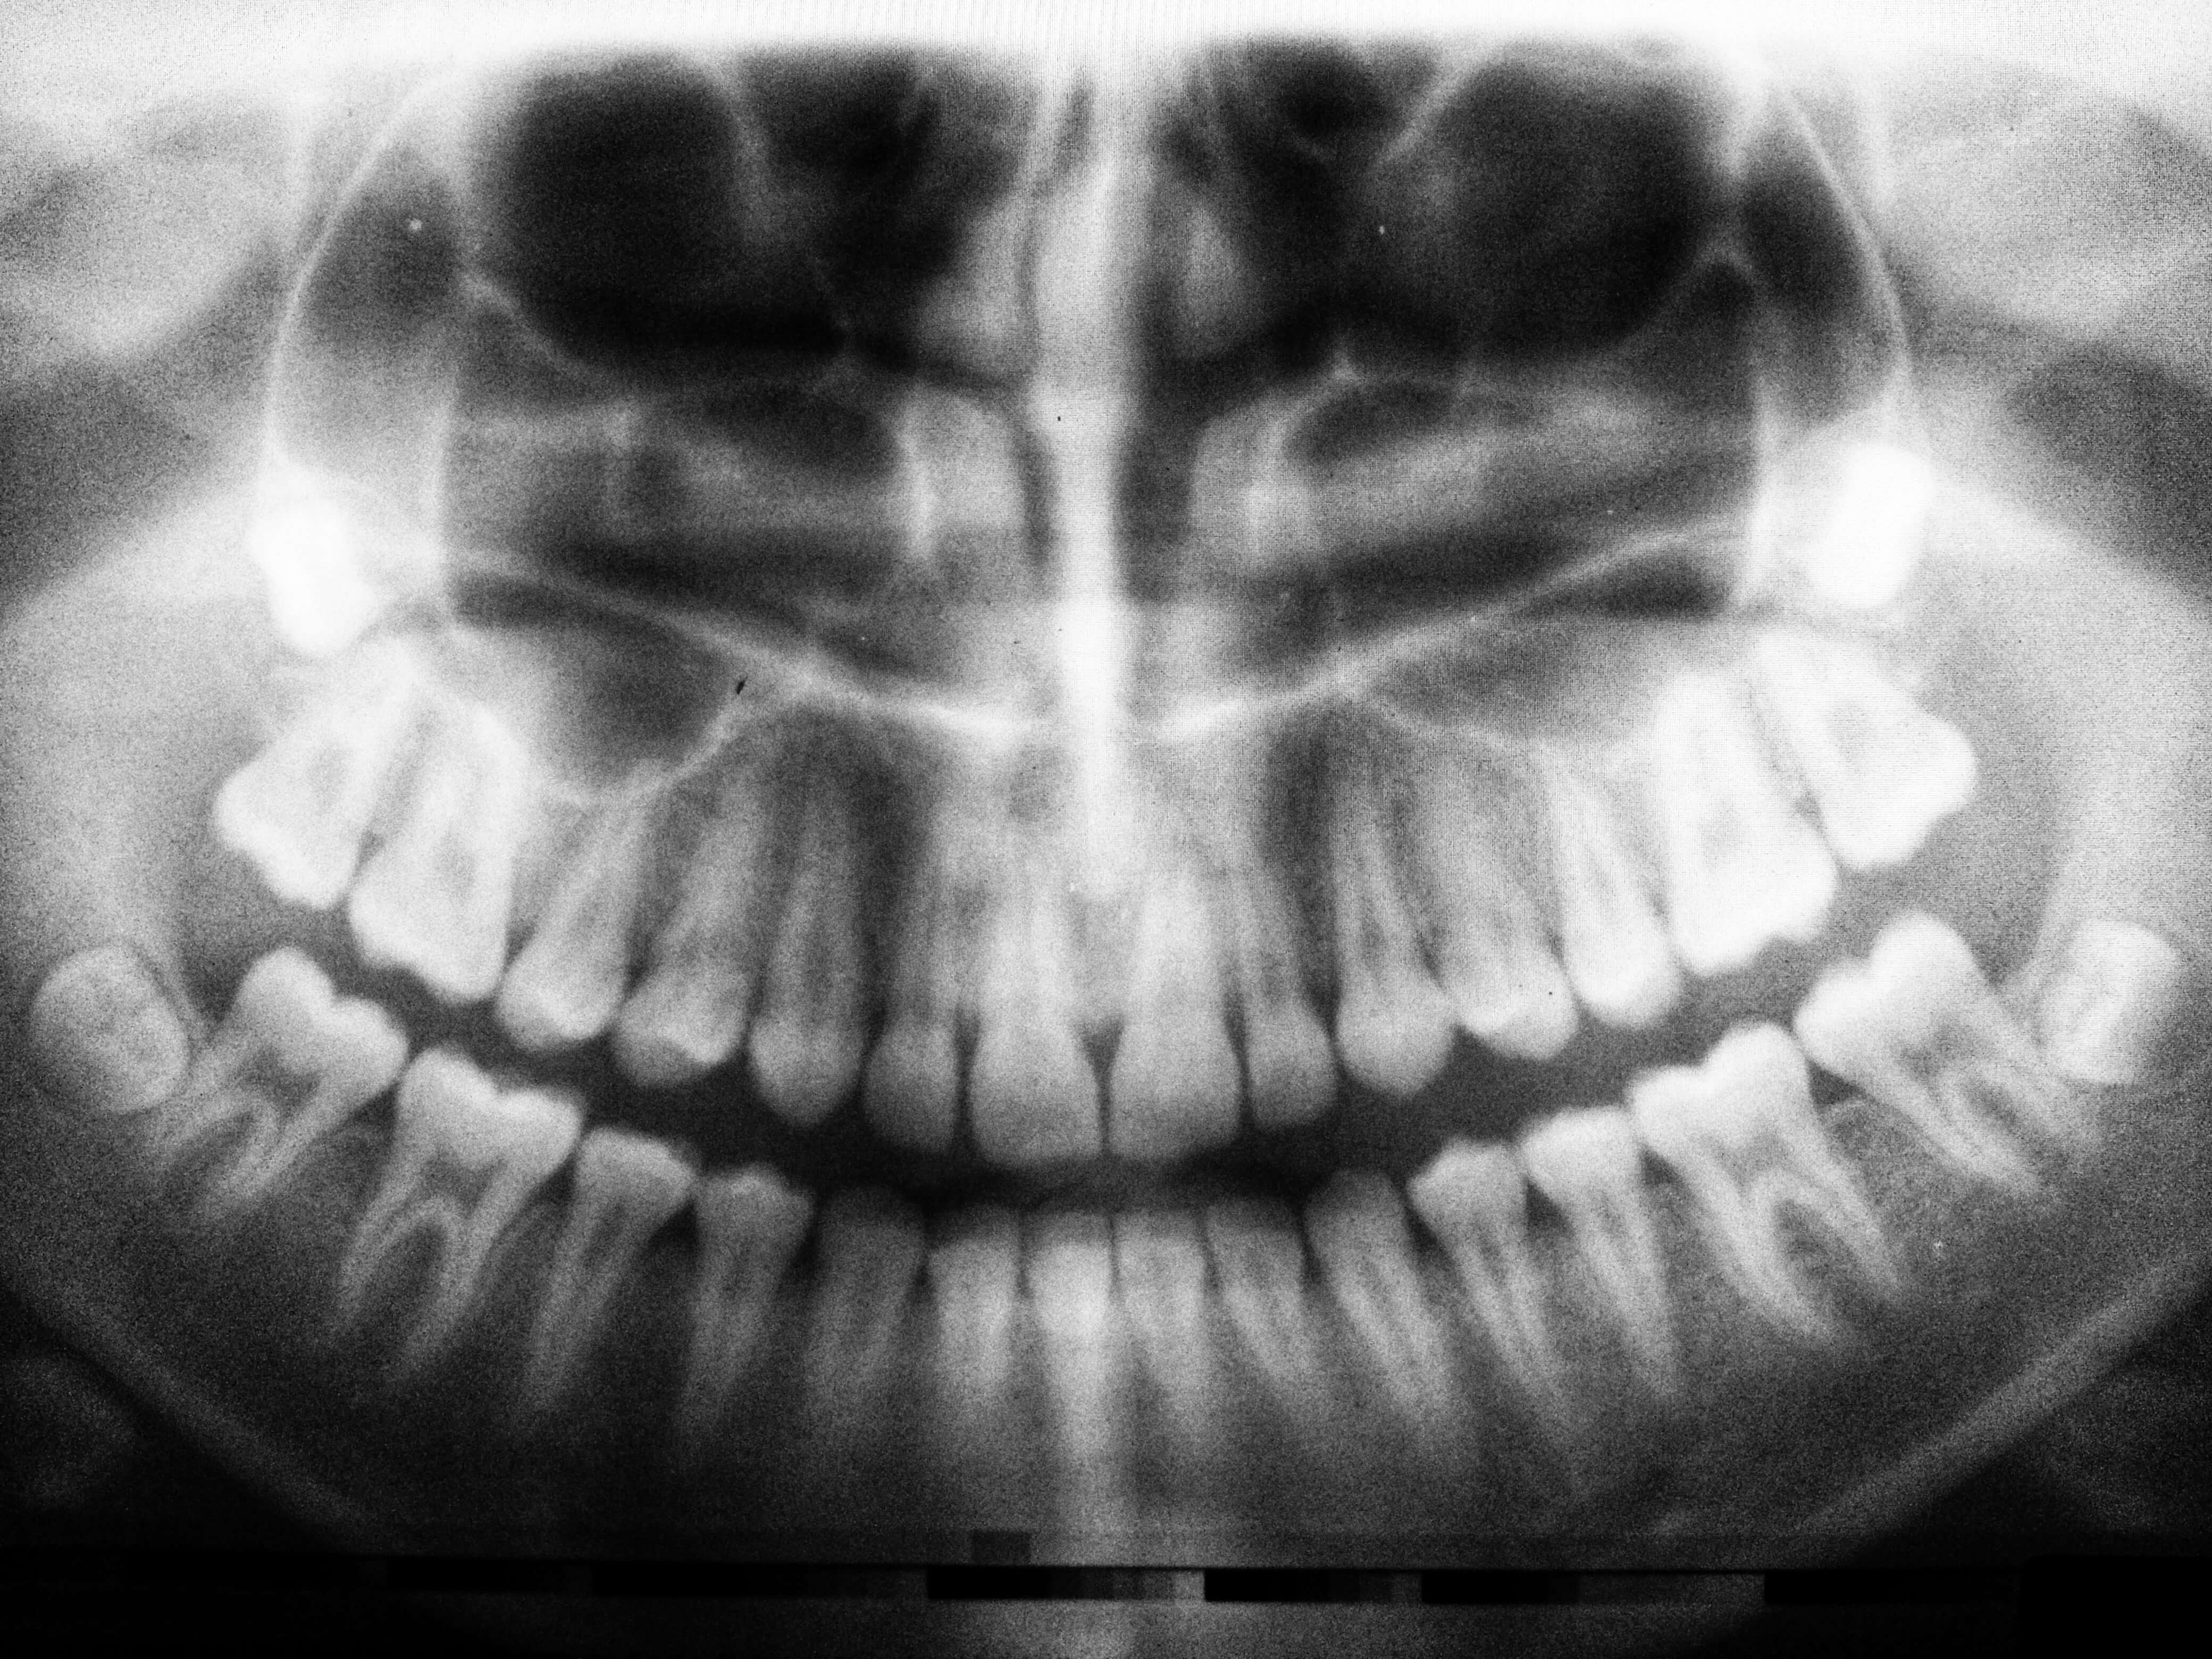 horizontal impacted wisdom teeth